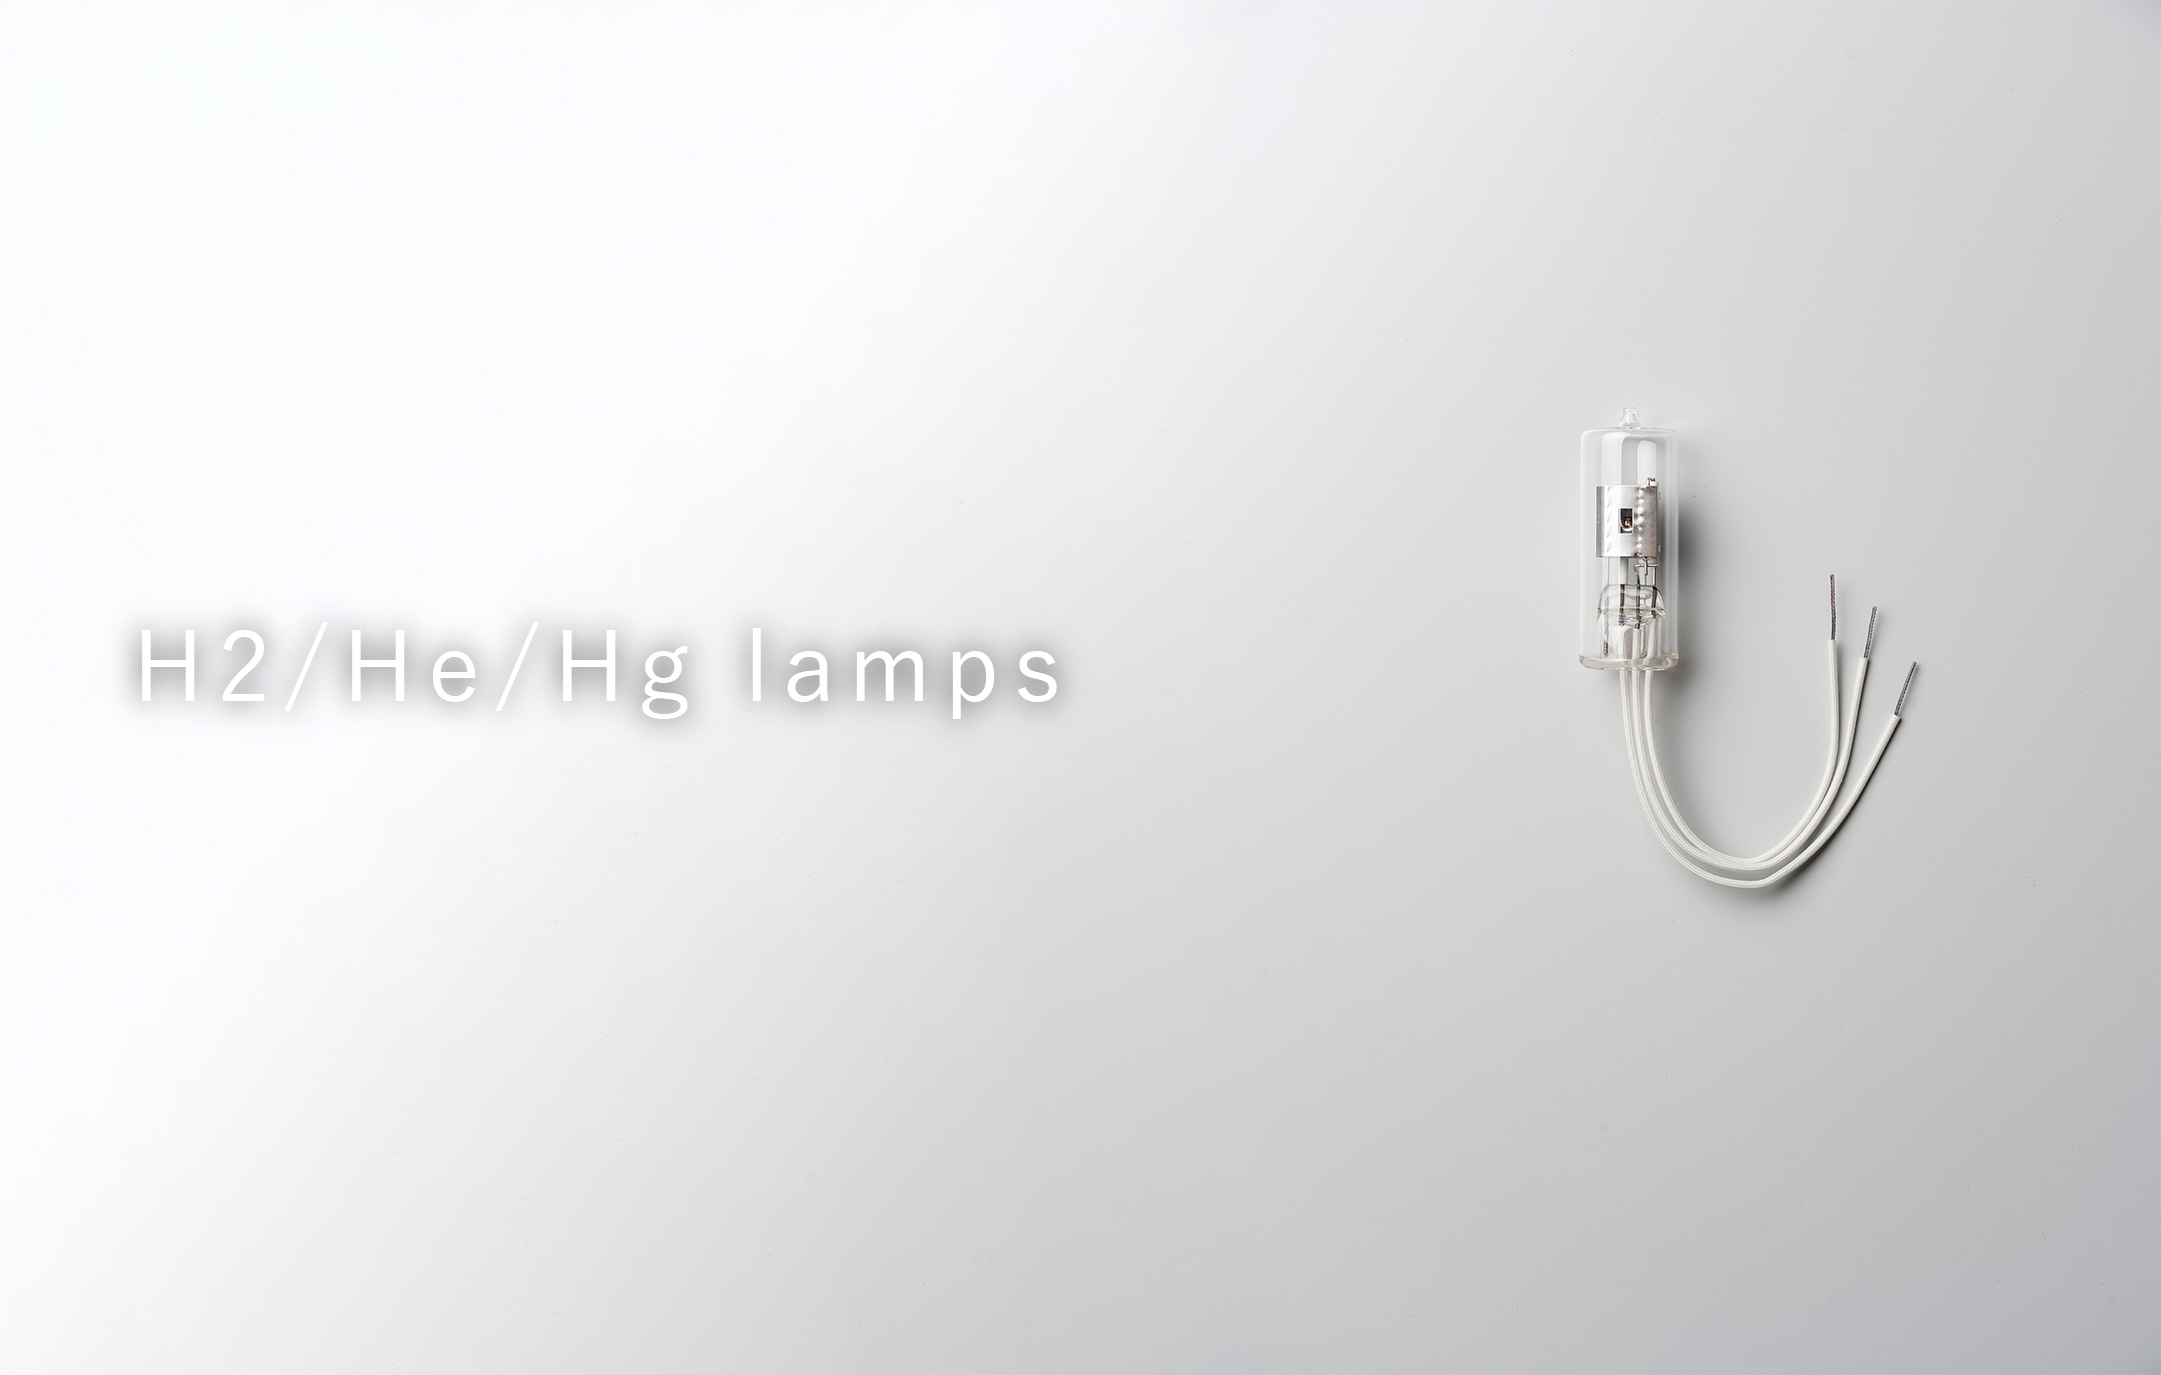 H2/He/Hg lamps